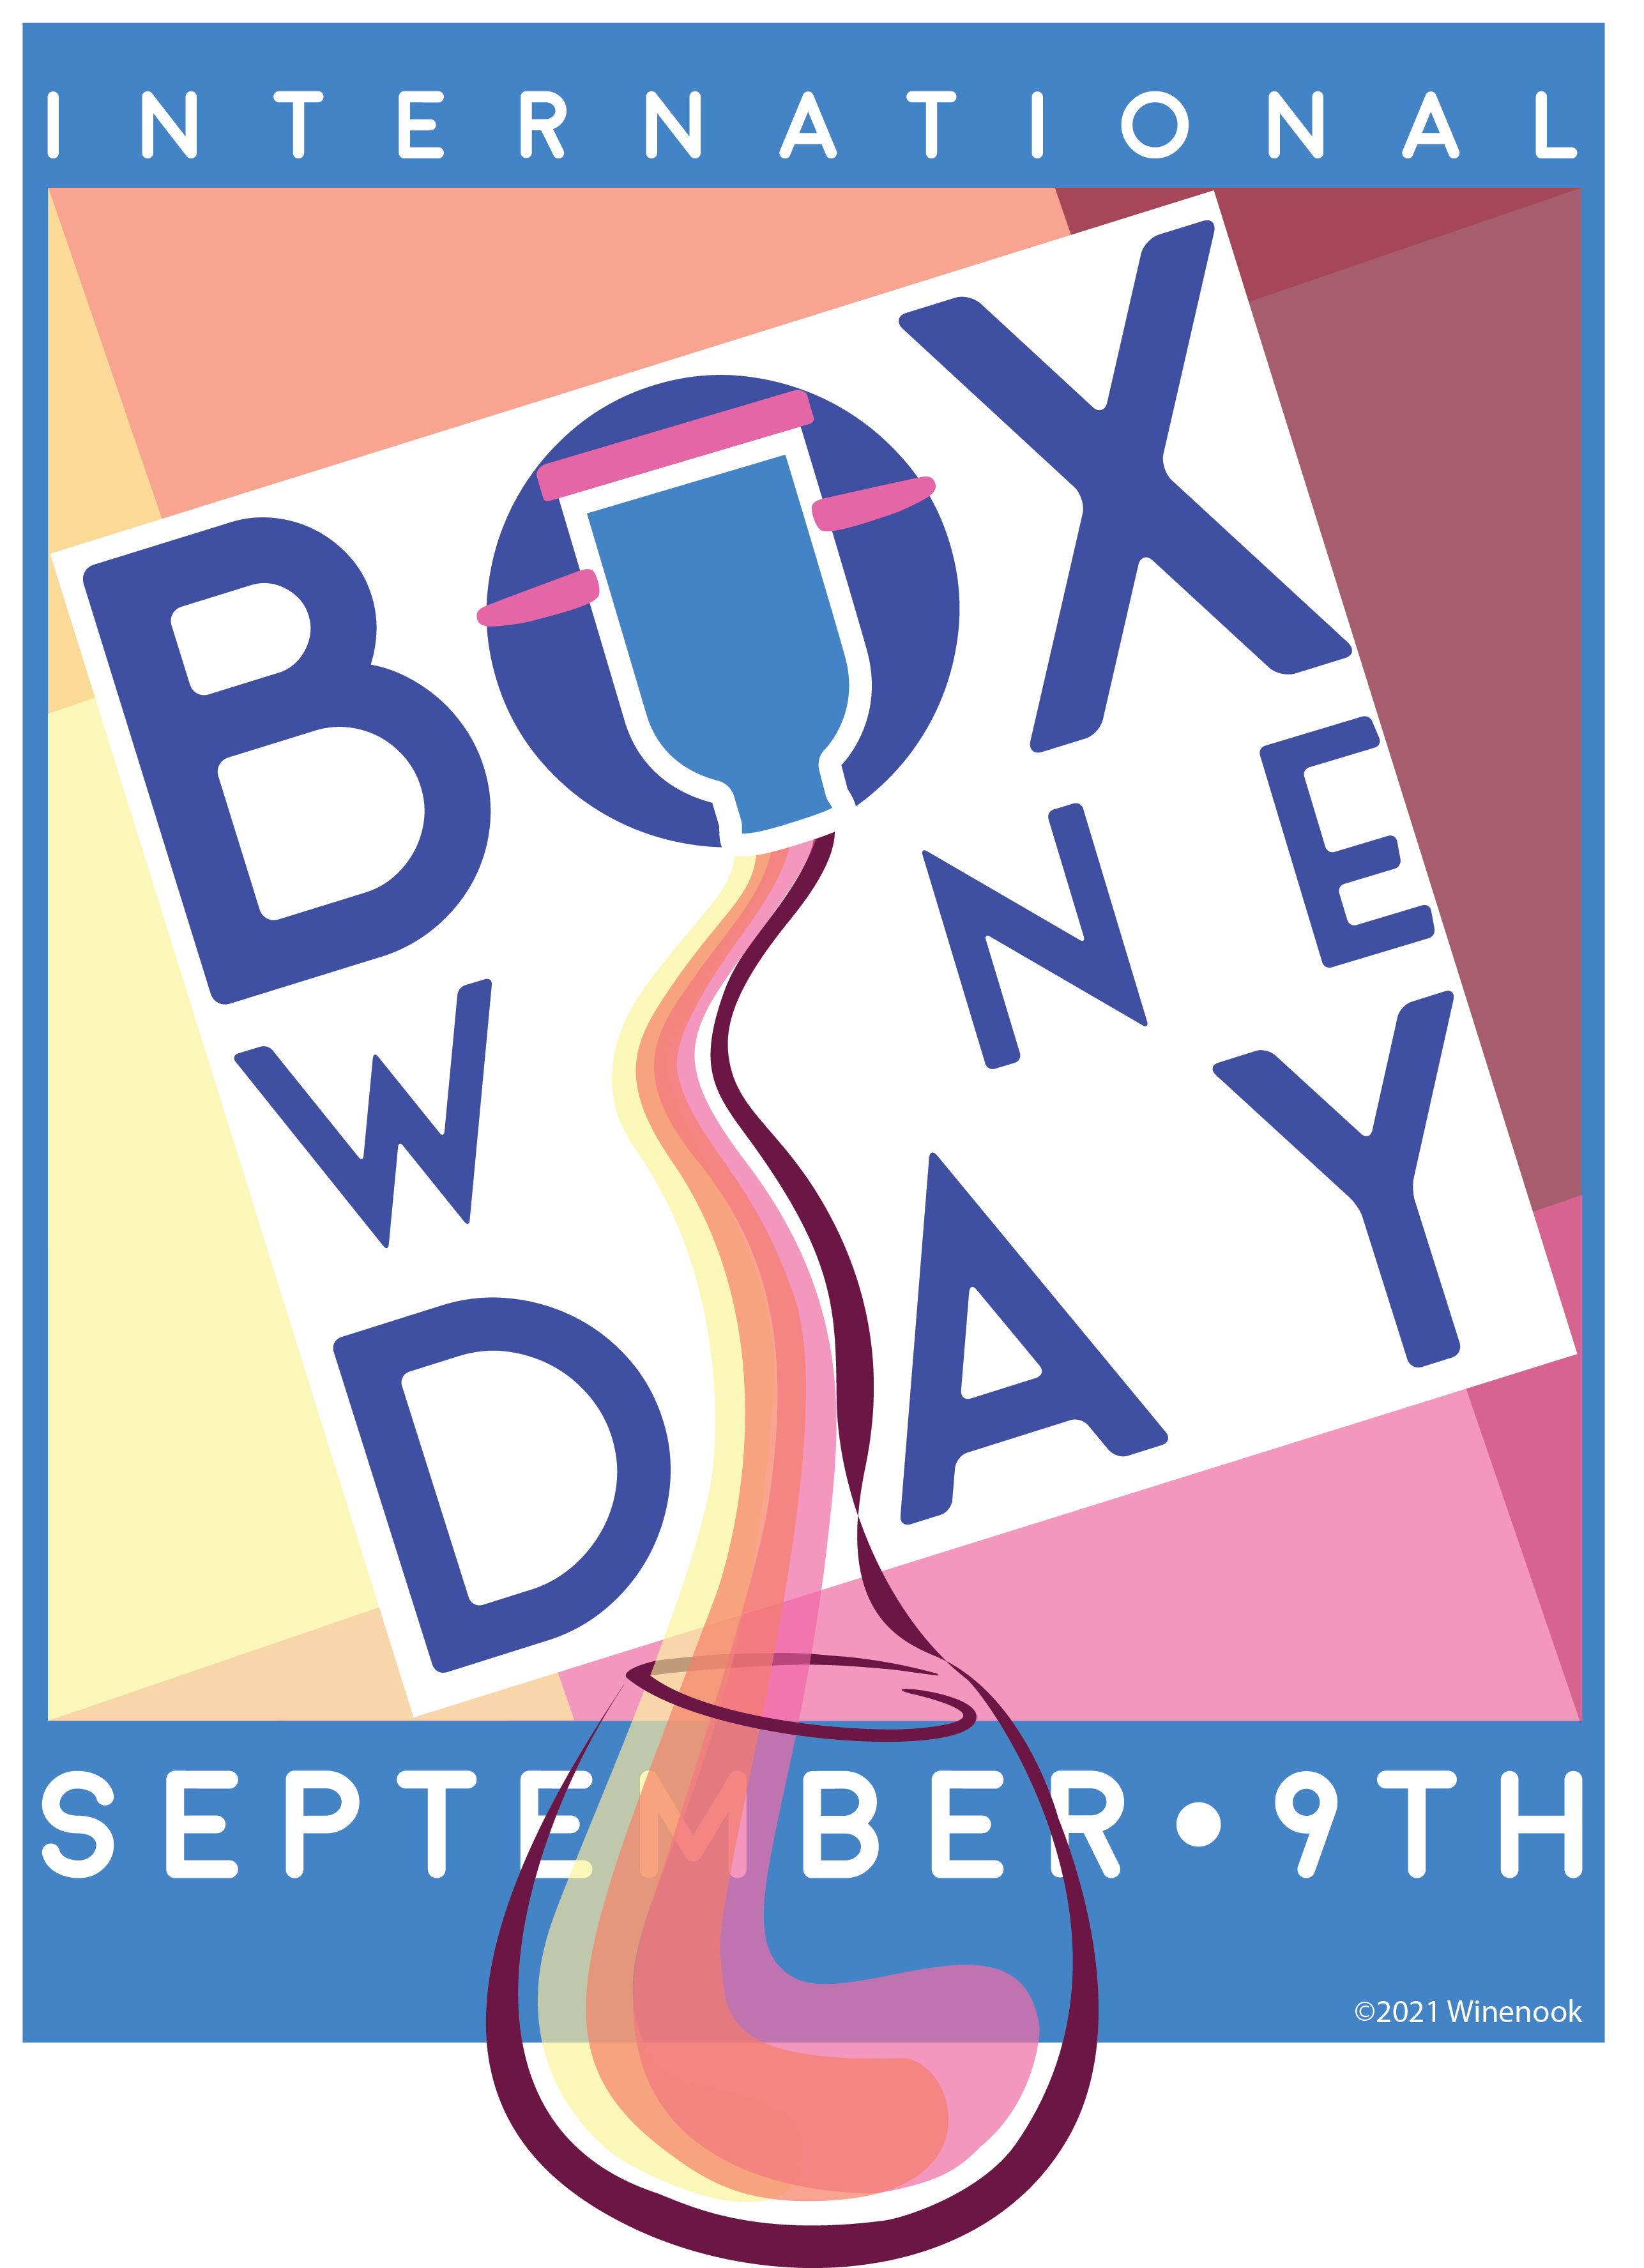 International Box Wine Day